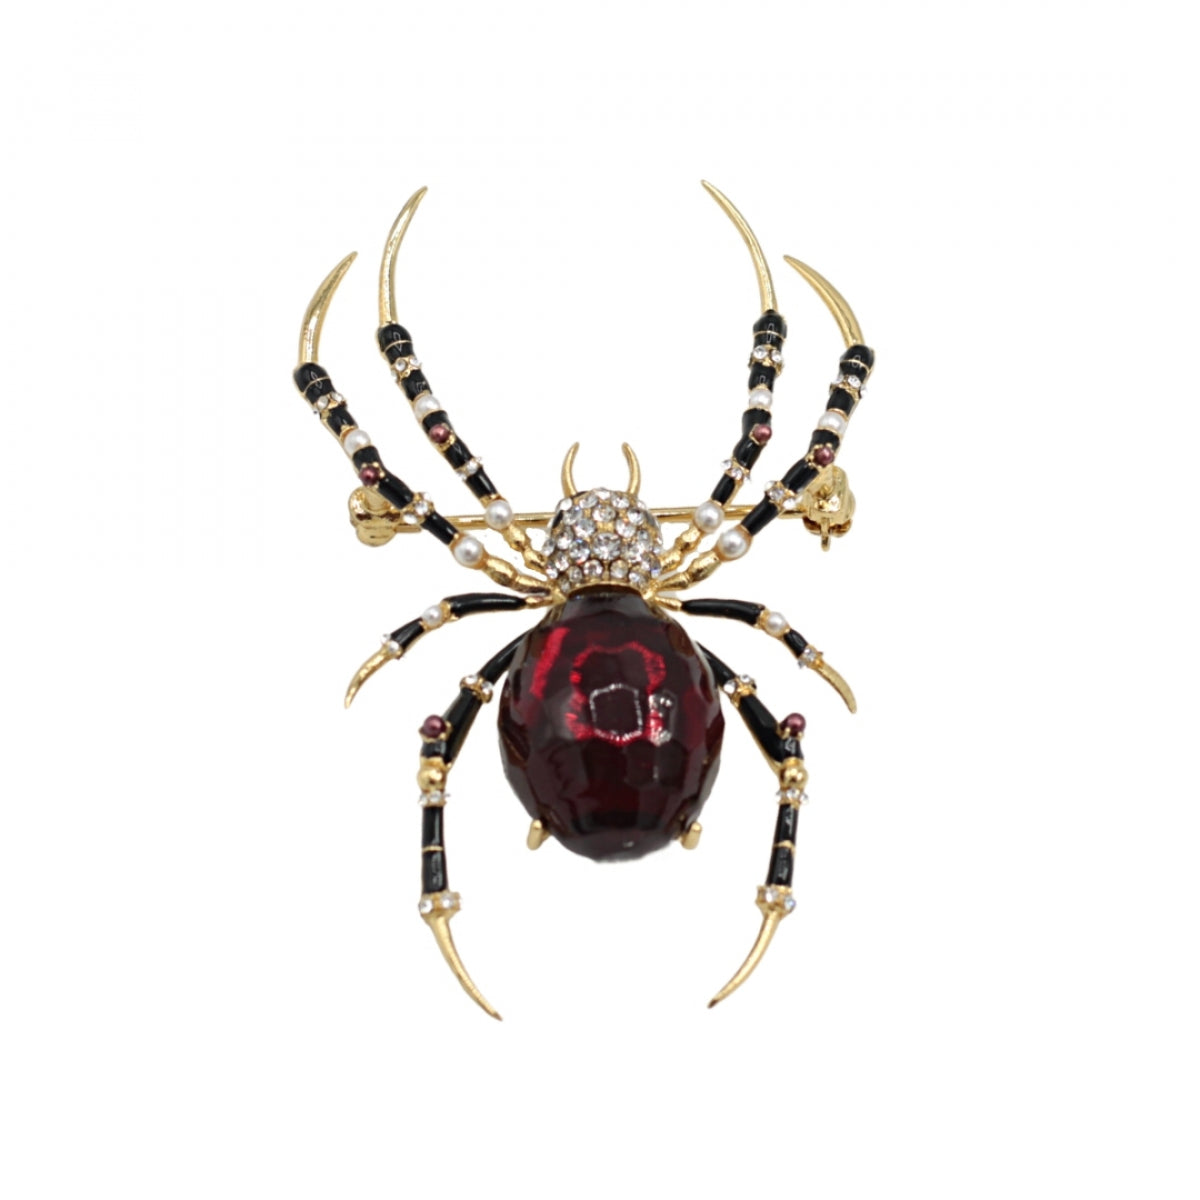 Bejewelled Spider Brooch – Bill Skinner Studio